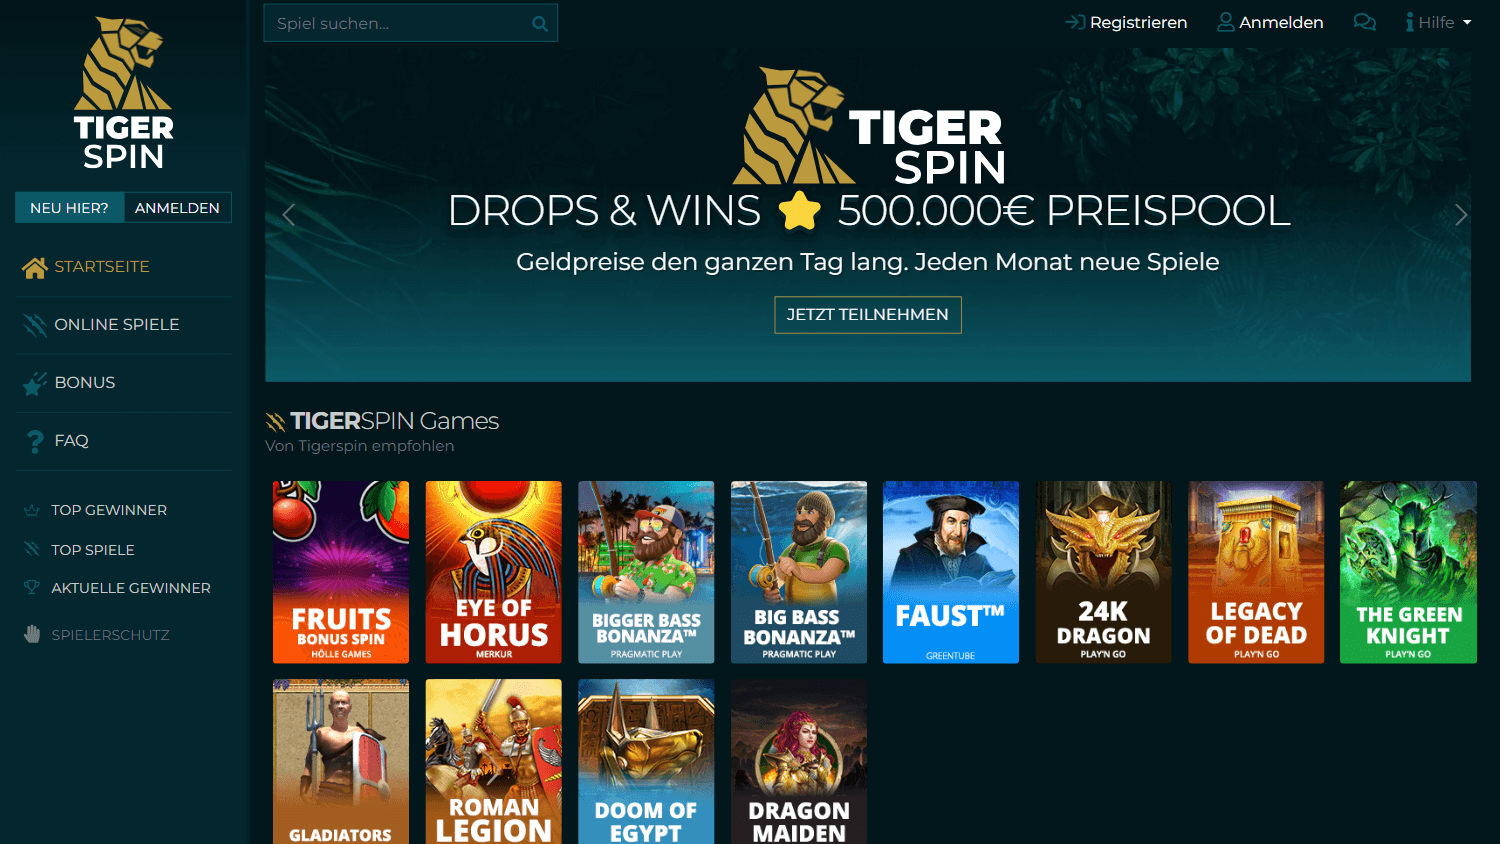 tigerspin_casino_de_homepage_desktop